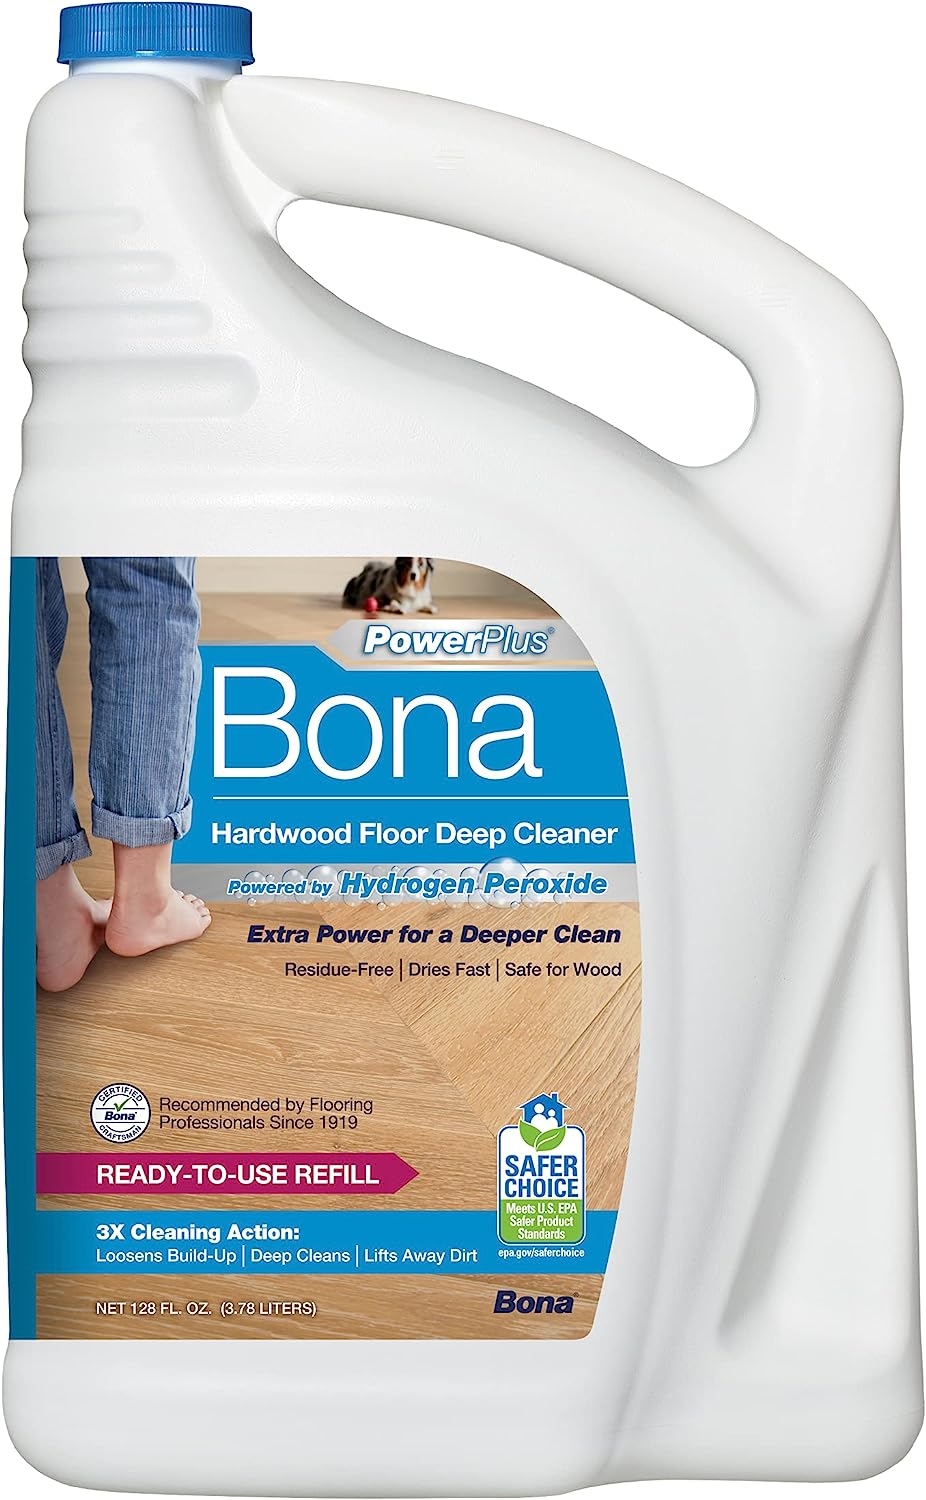 Bona PowerPlus Hardwood Floor Deep Cleaner Refill - [...]